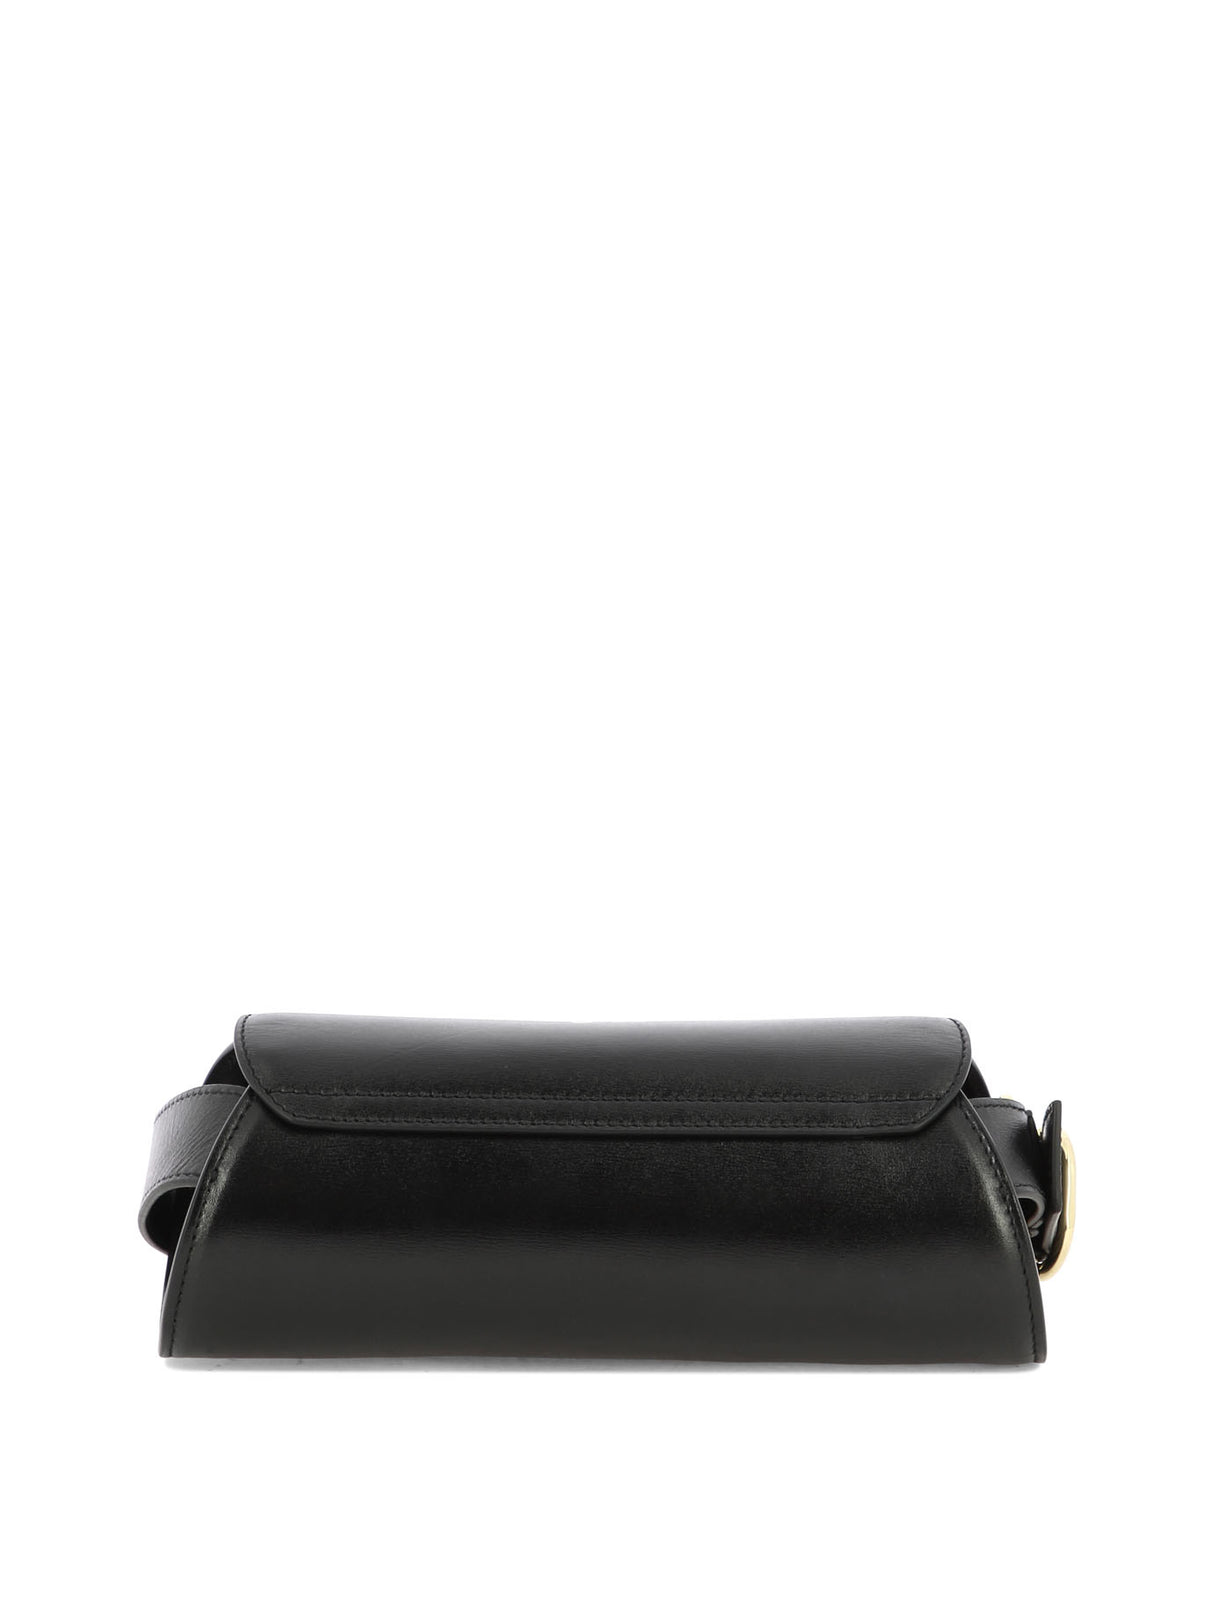 JIL SANDER Mini Cannolo Black Leather Crossbody Bag for Women